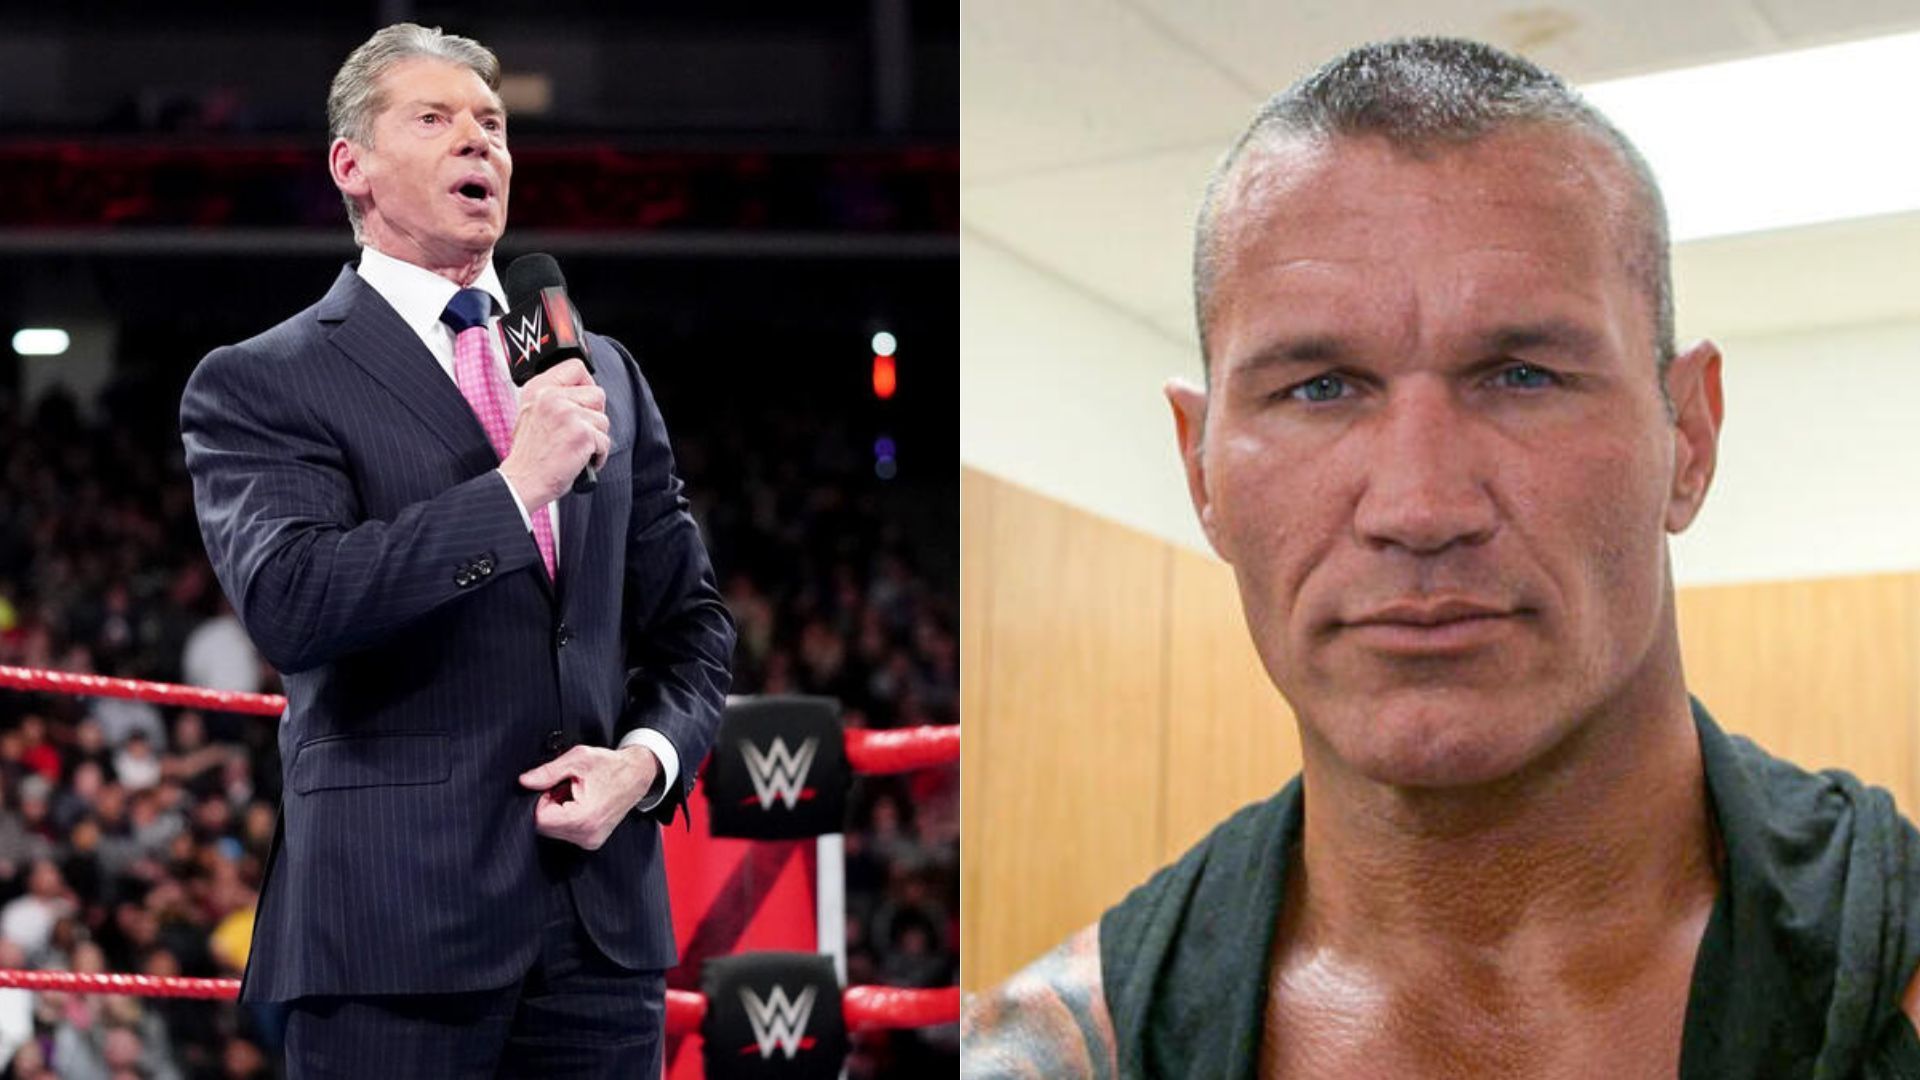 Vince McMahon (left); Randy Orton (right) [Image Credit: wwe.com]